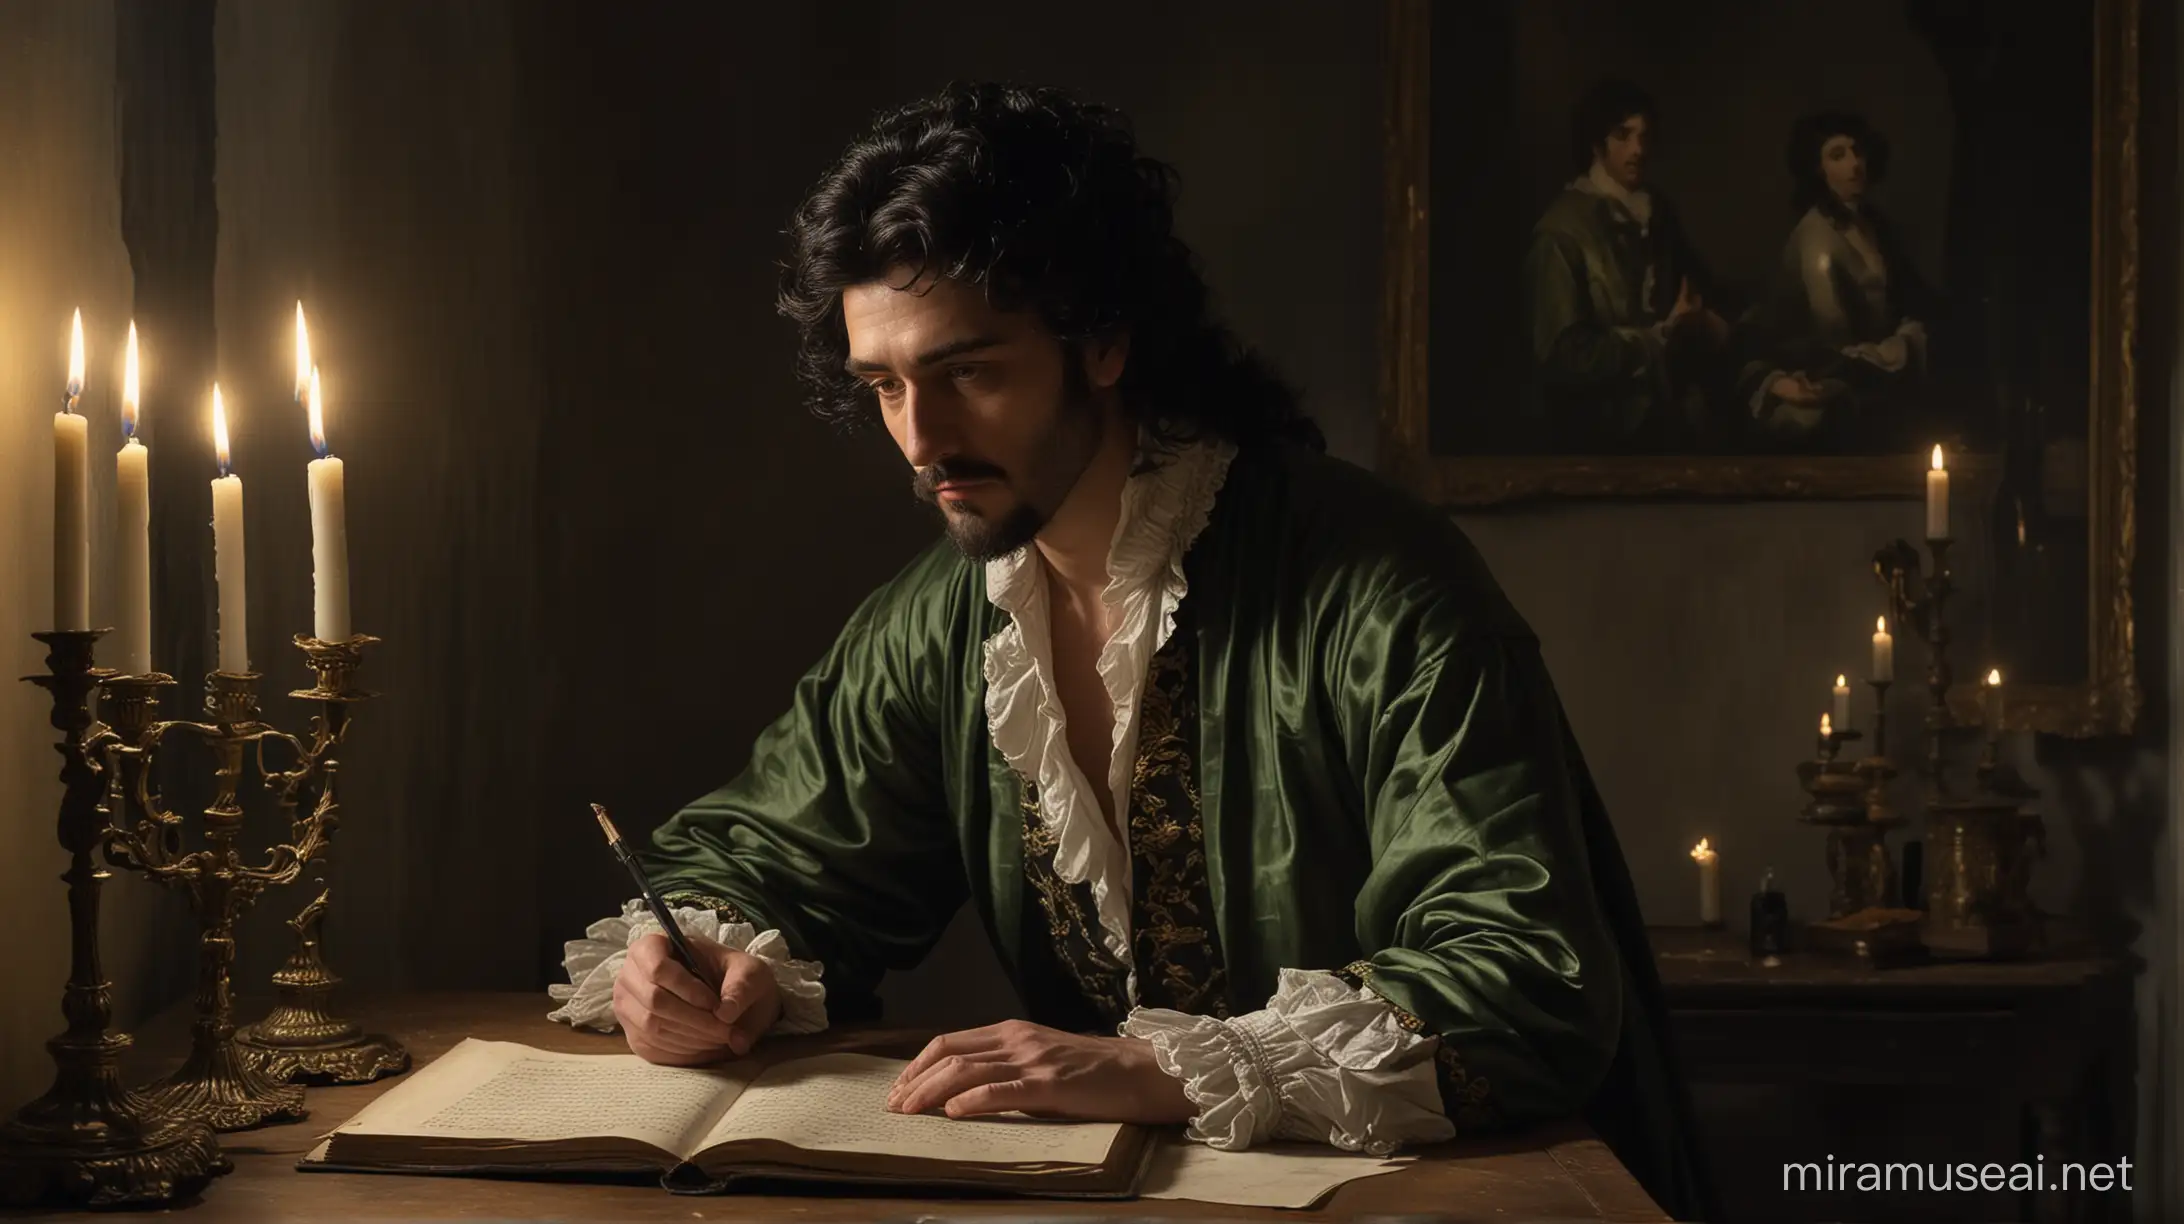 Baroque Gentleman Writing by Candlelight in Haussmannian Interior